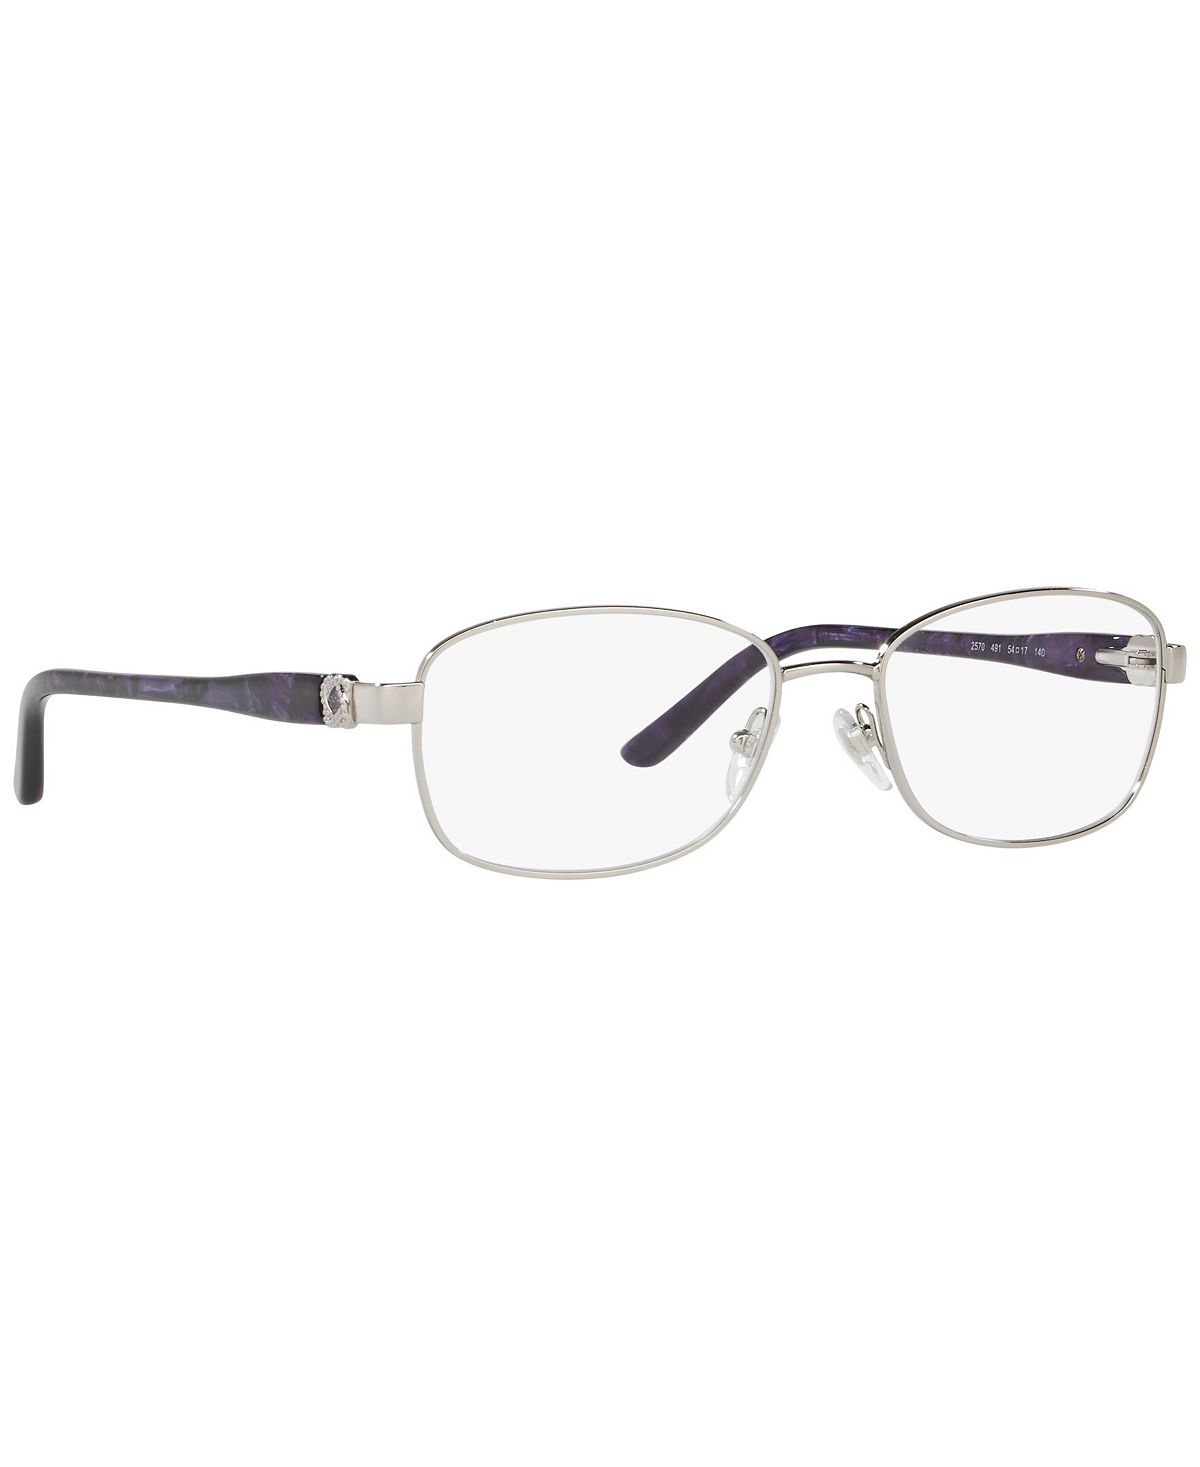 Женские очки, SF2570 54 Sferoflex, серебро